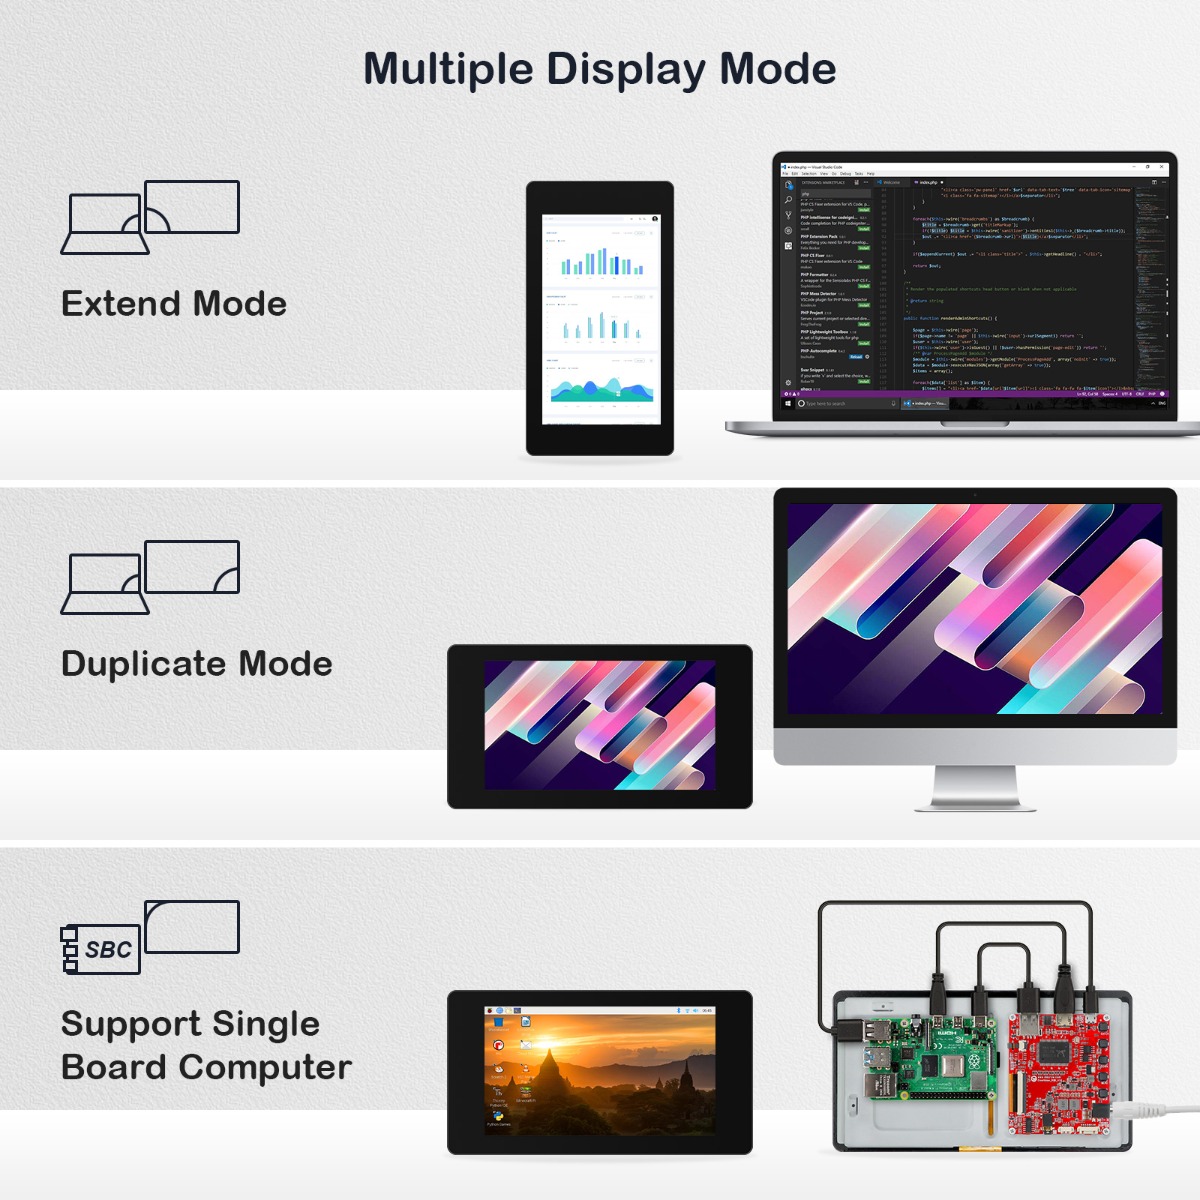 Multiple display mode